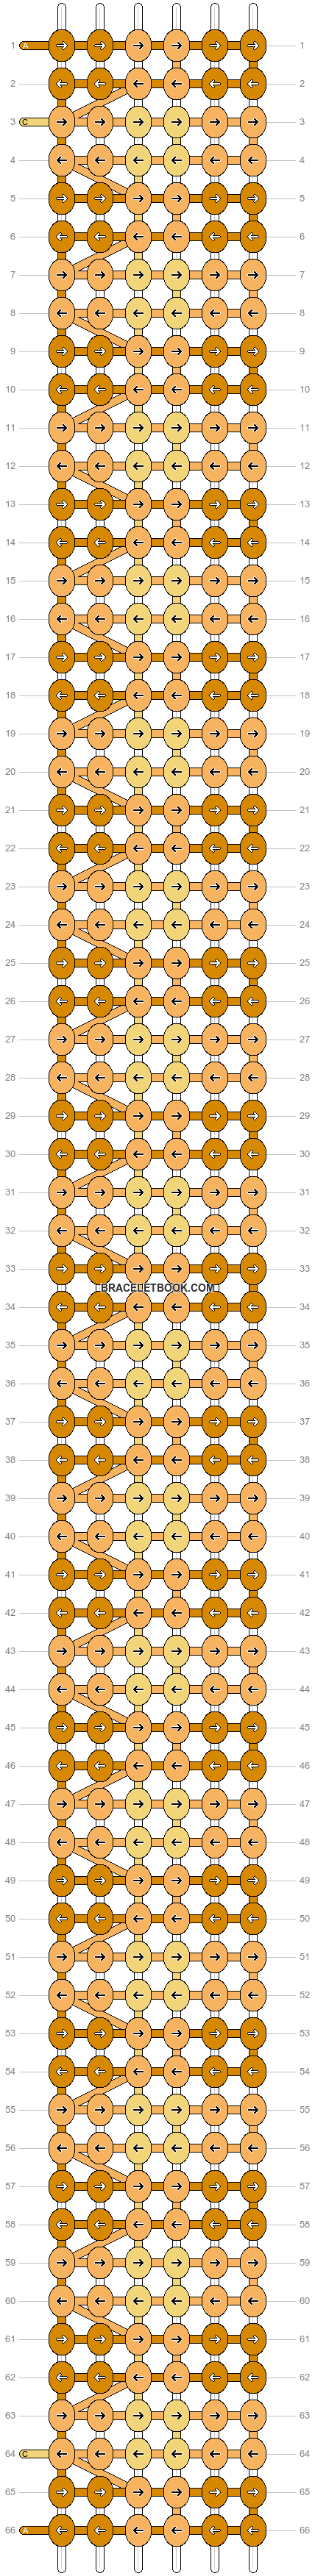 Alpha pattern #80755 variation #199736 pattern